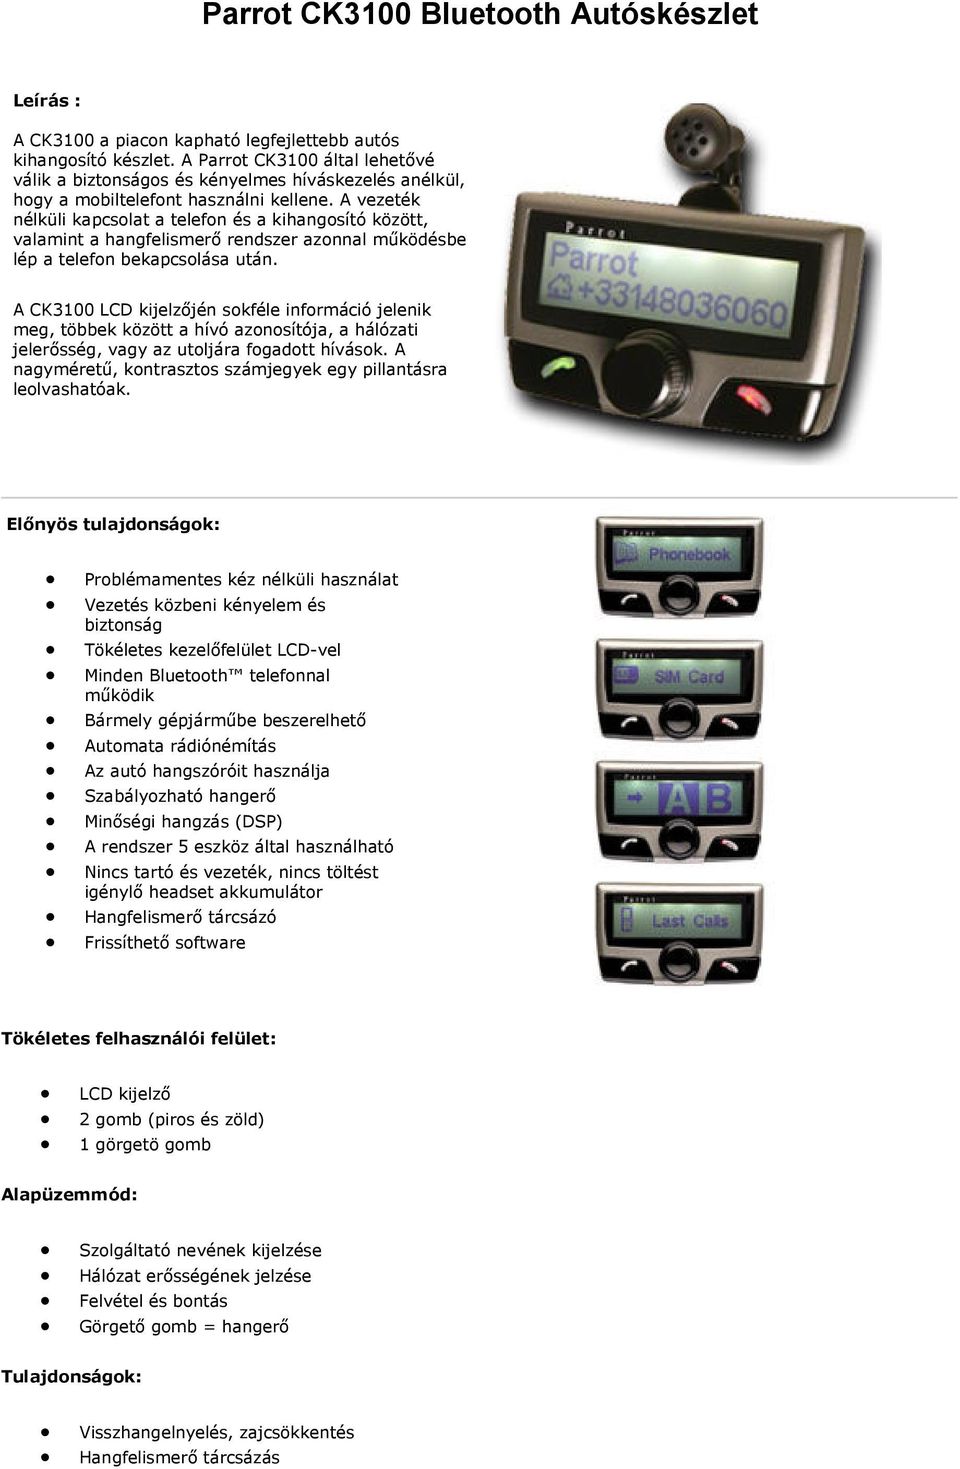 Parrot CK3100 Bluetooth Autóskészlet - PDF Free Download